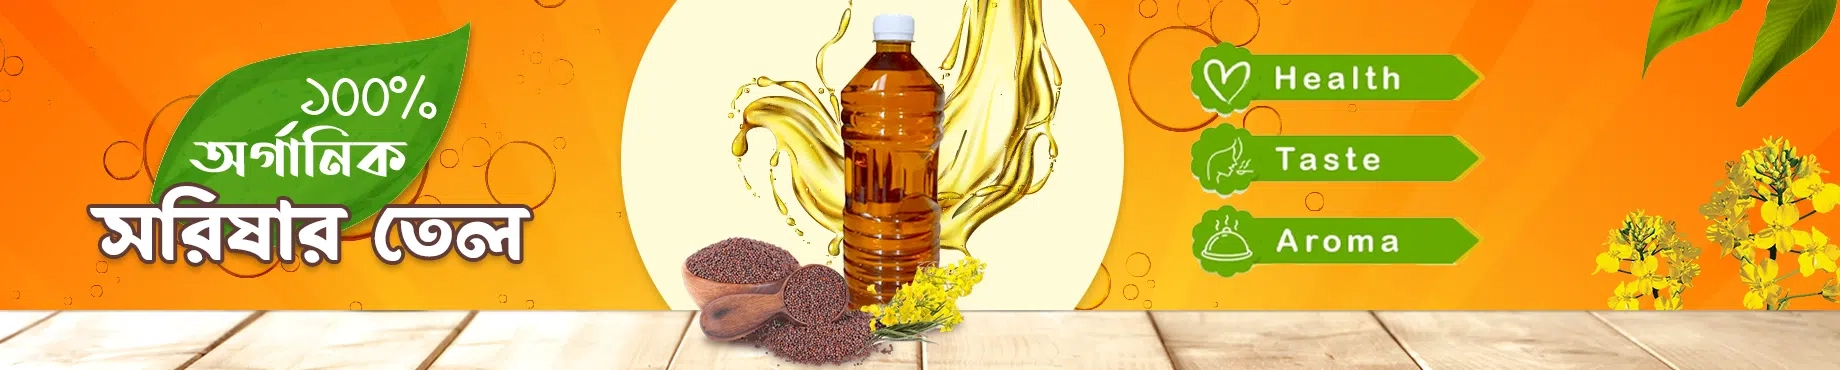 Organic Mustard Oil